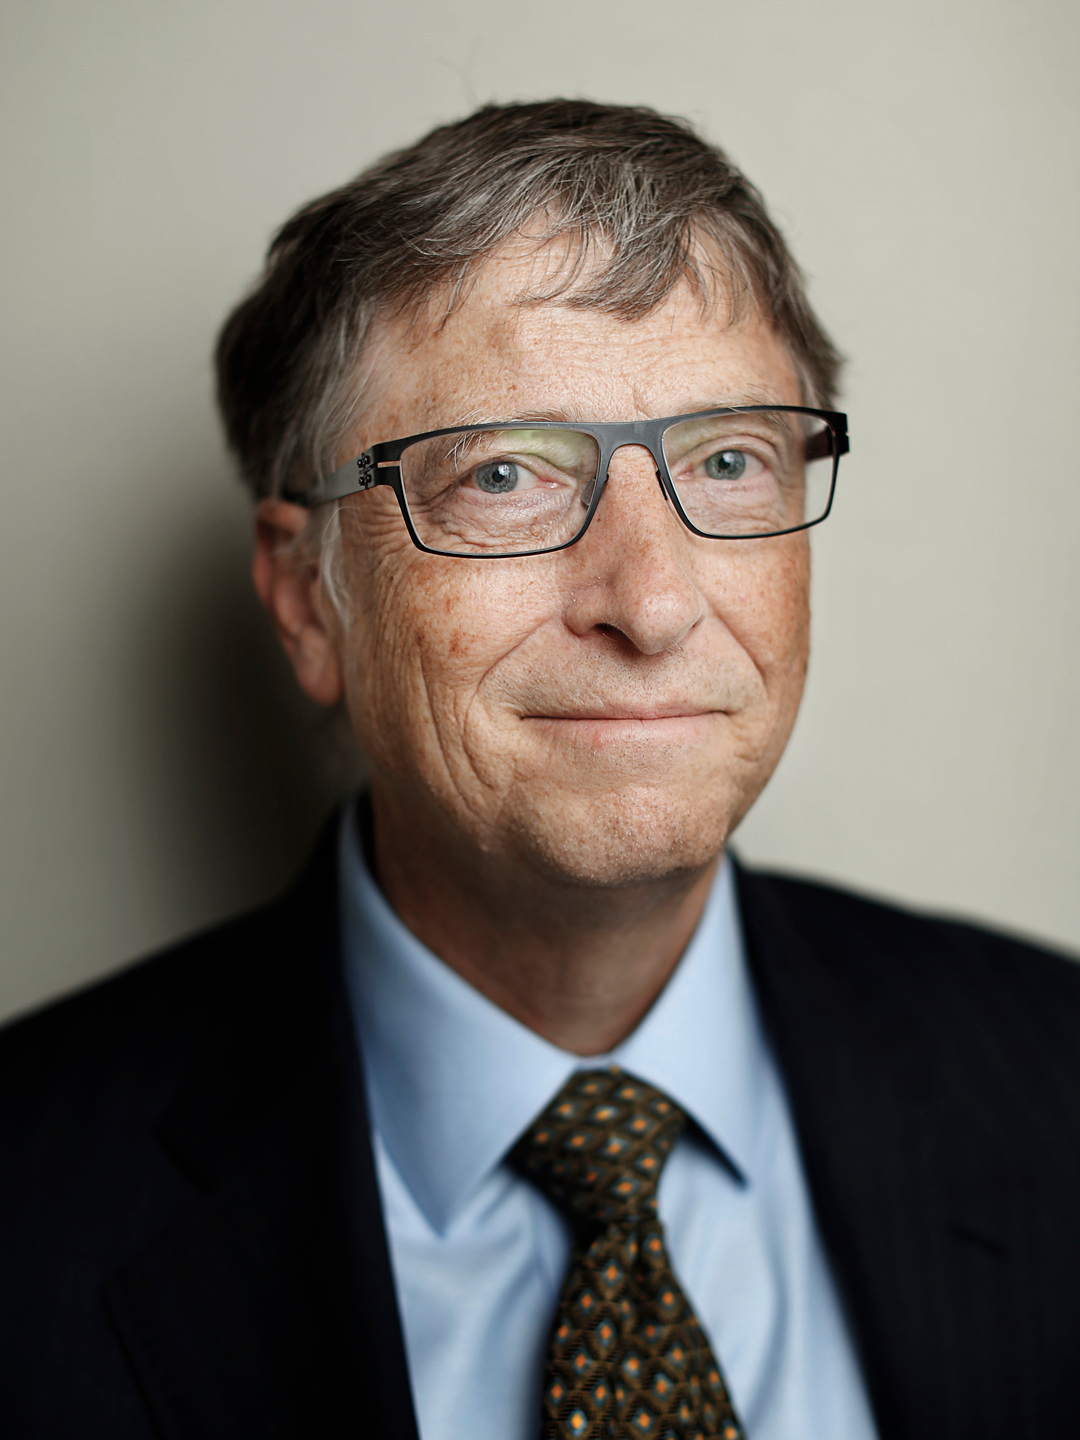 Bill Gates place of birth